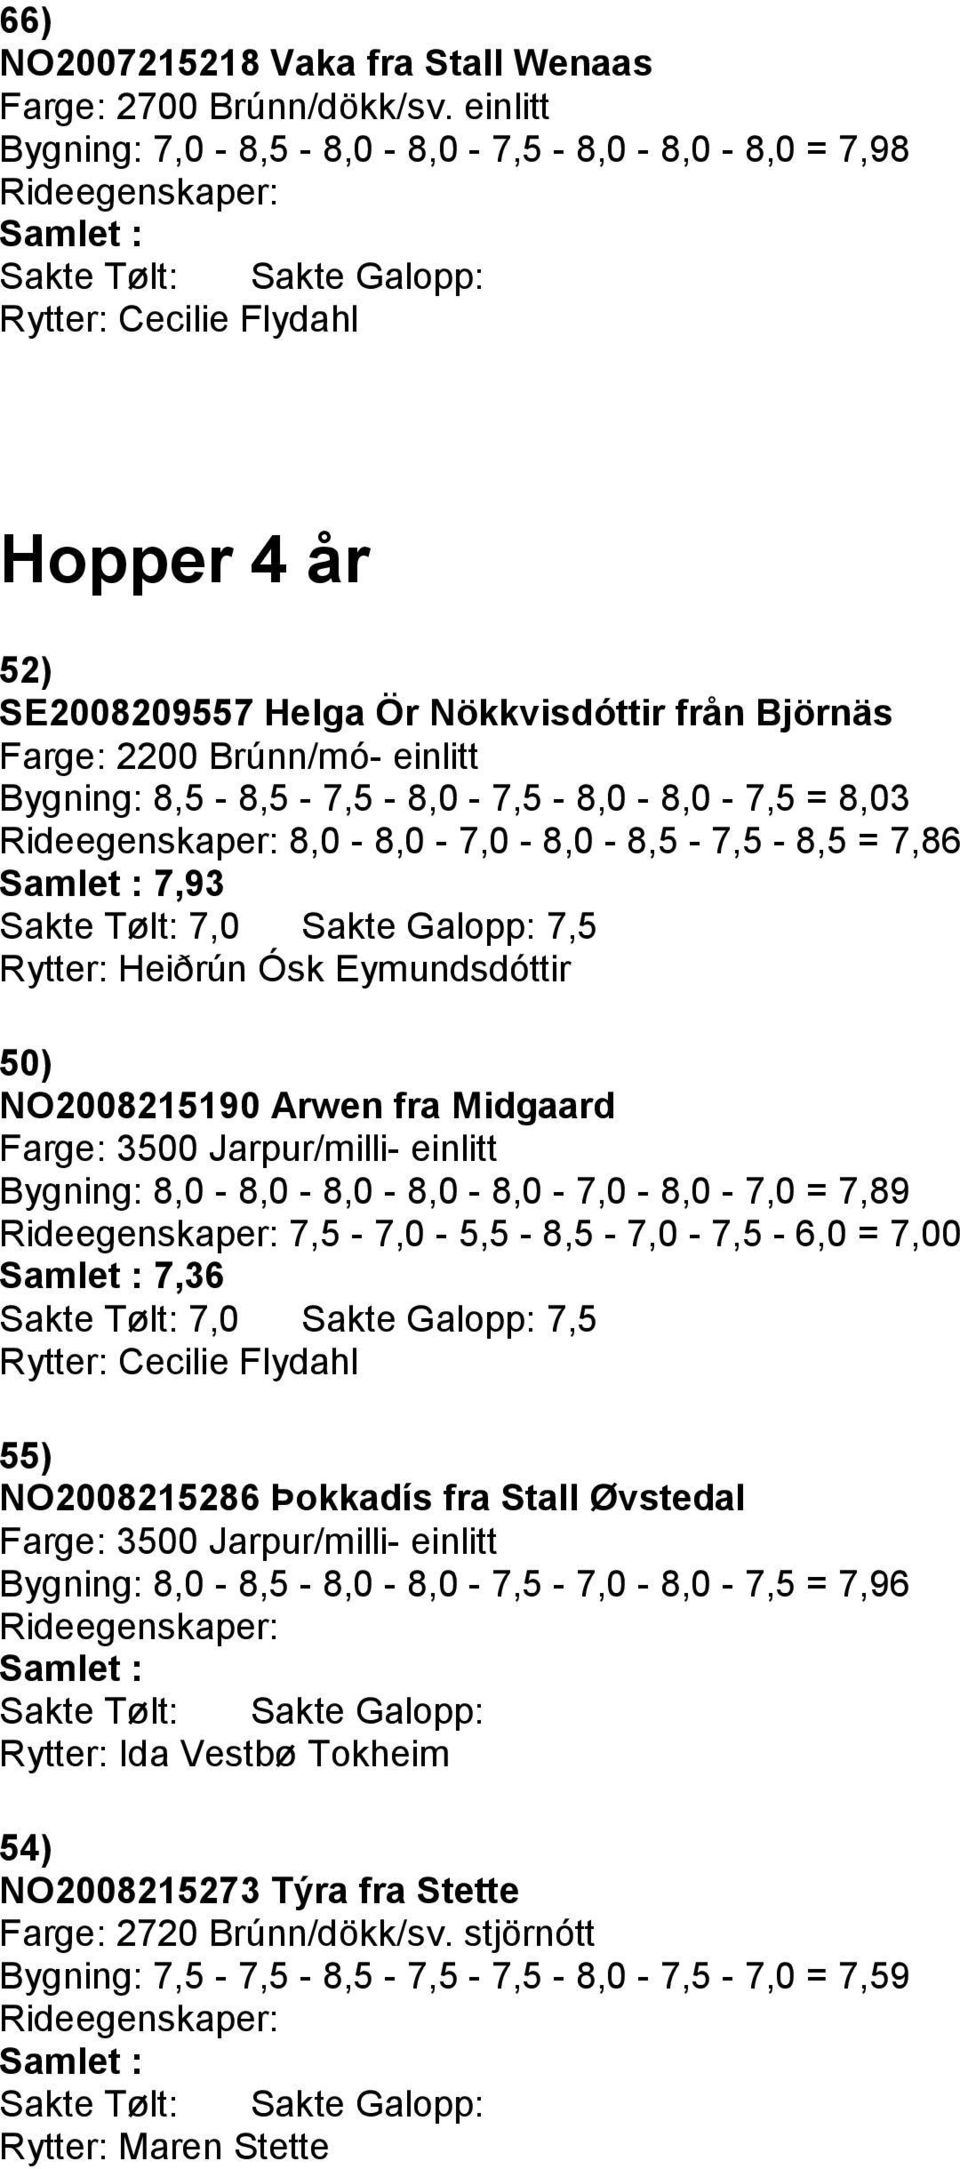 Midgaard Bygning: 8,0-8,0-8,0-8,0-8,0-7,0-8,0-7,0 = 7,89 7,5-7,0-5,5-8,5-7,0-7,5-6,0 = 7,00 7,36 Sakte Tølt: 7,0 Sakte Galopp: 7,5 55) NO2008215286 Þokkadís fra Stall Øvstedal Bygning: